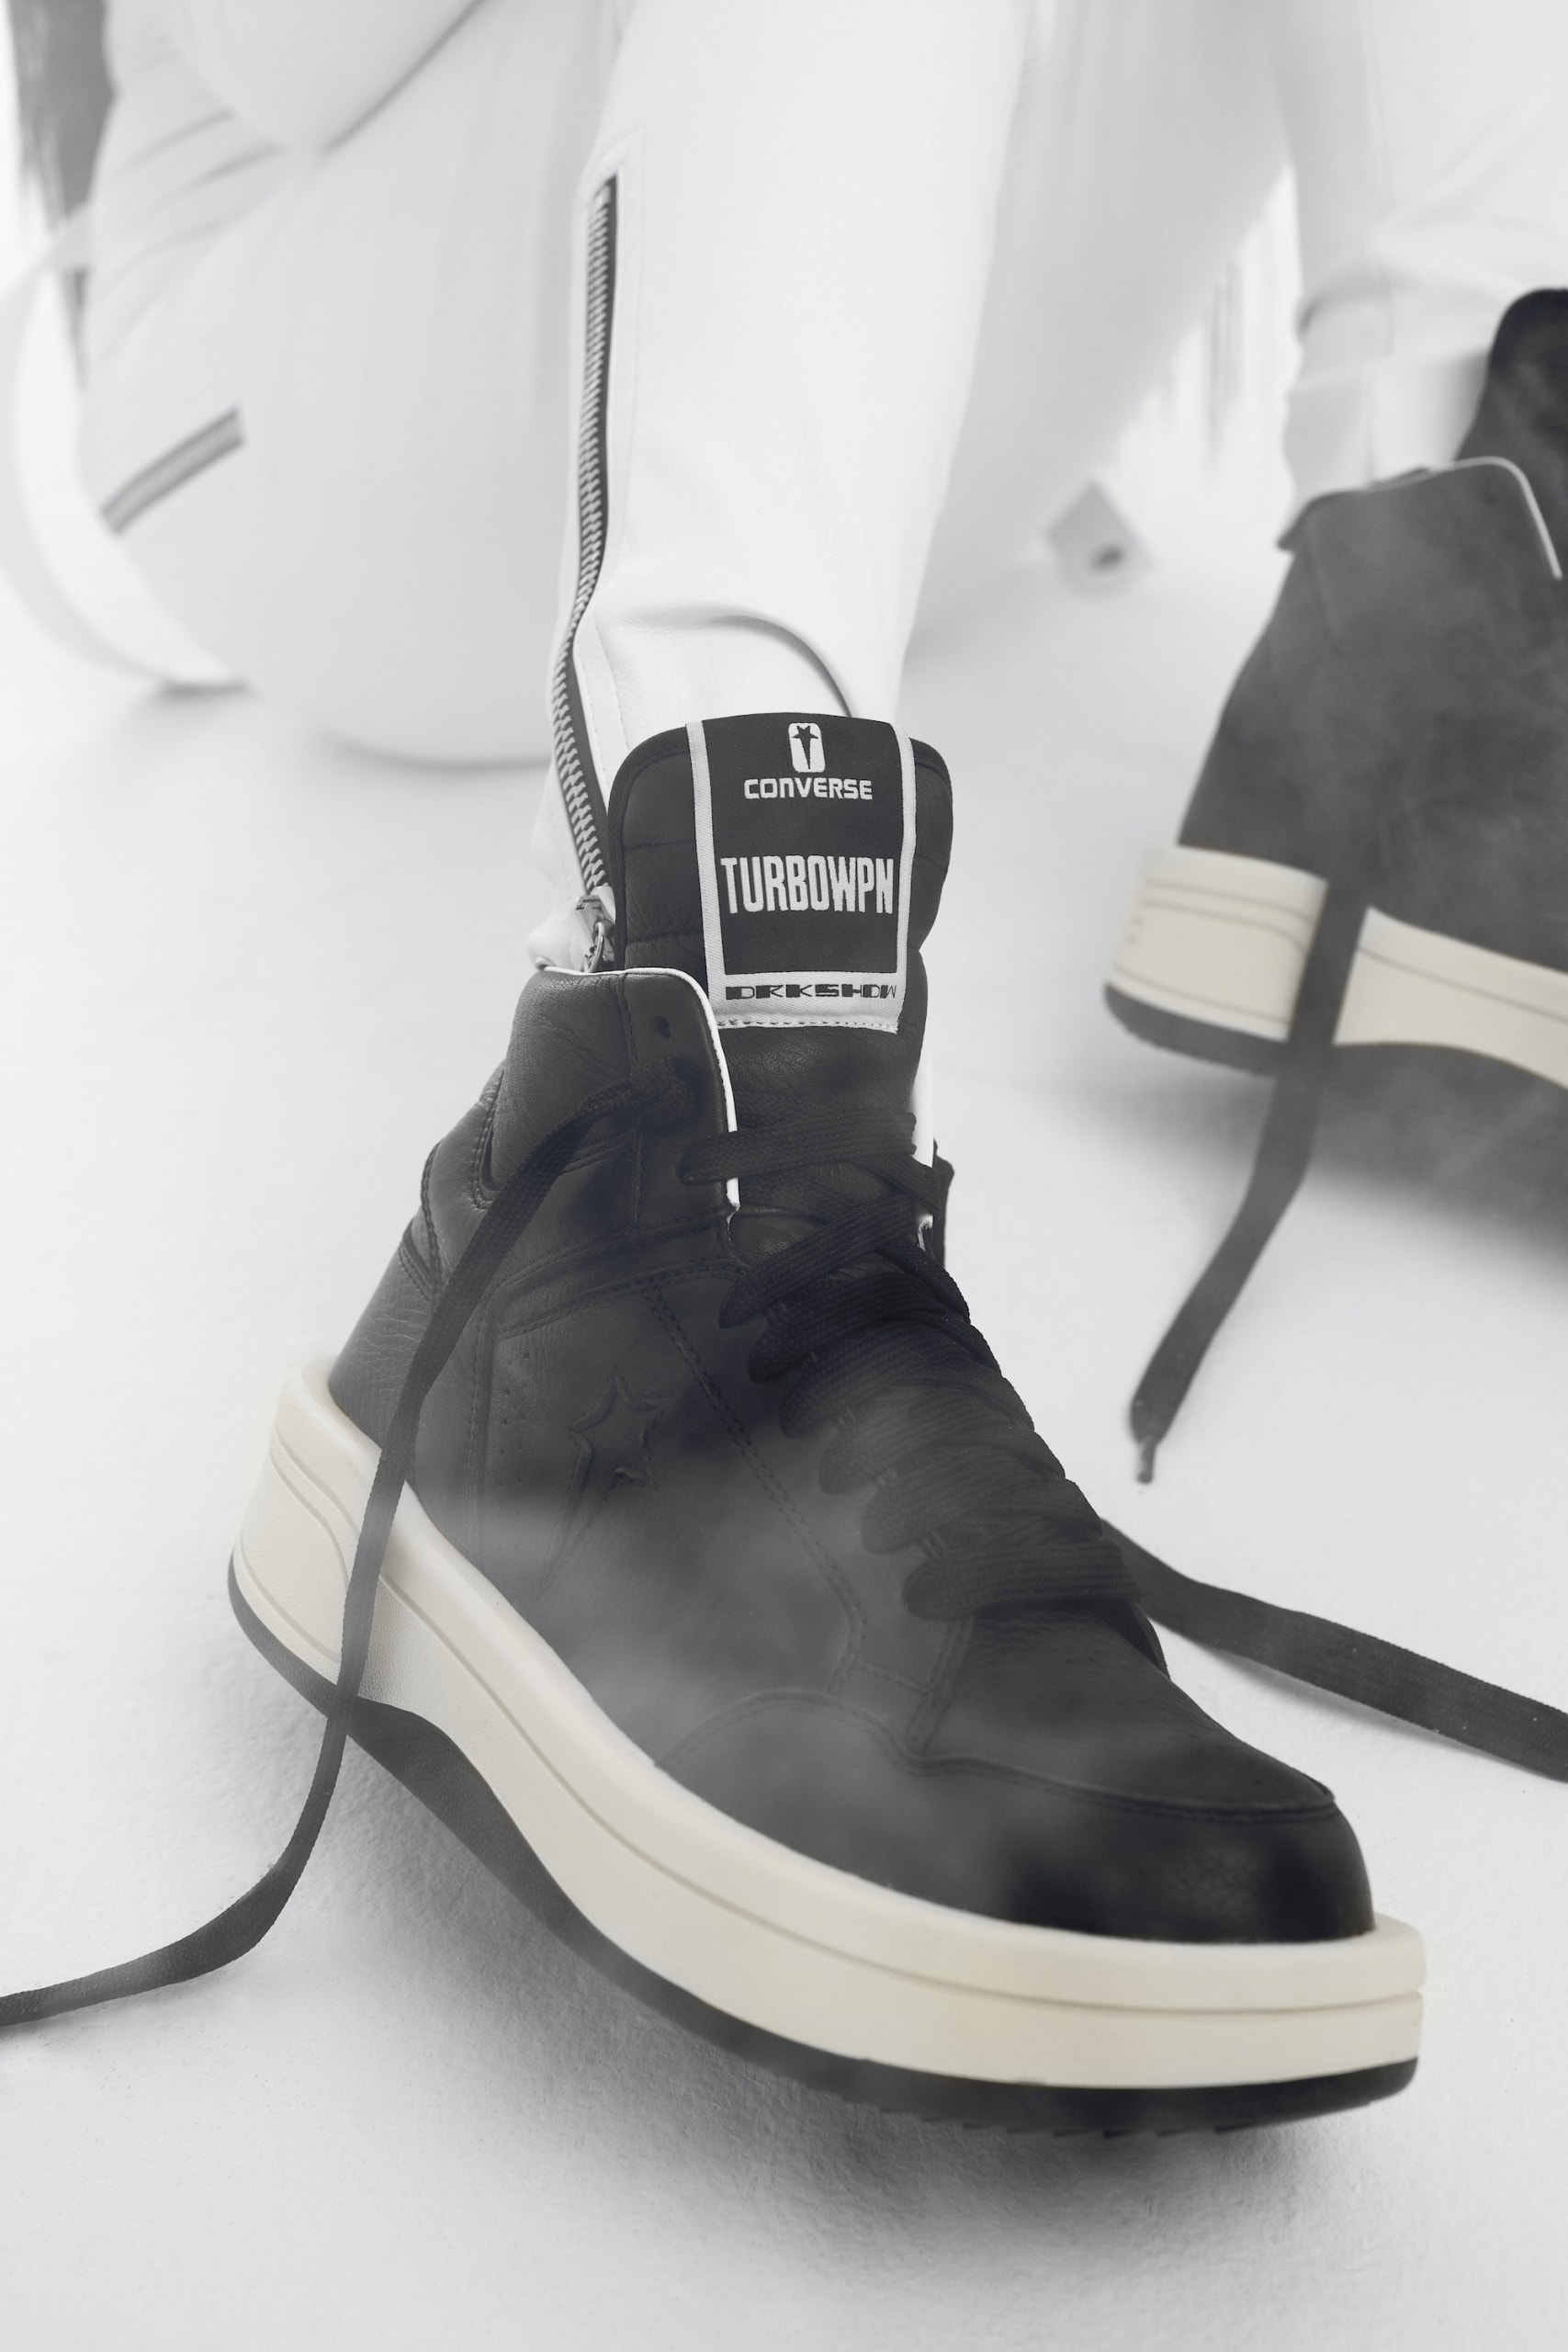 Converse 再度攜手 DRKSHDW 合作打造 TURBOWPN 聯名鞋款